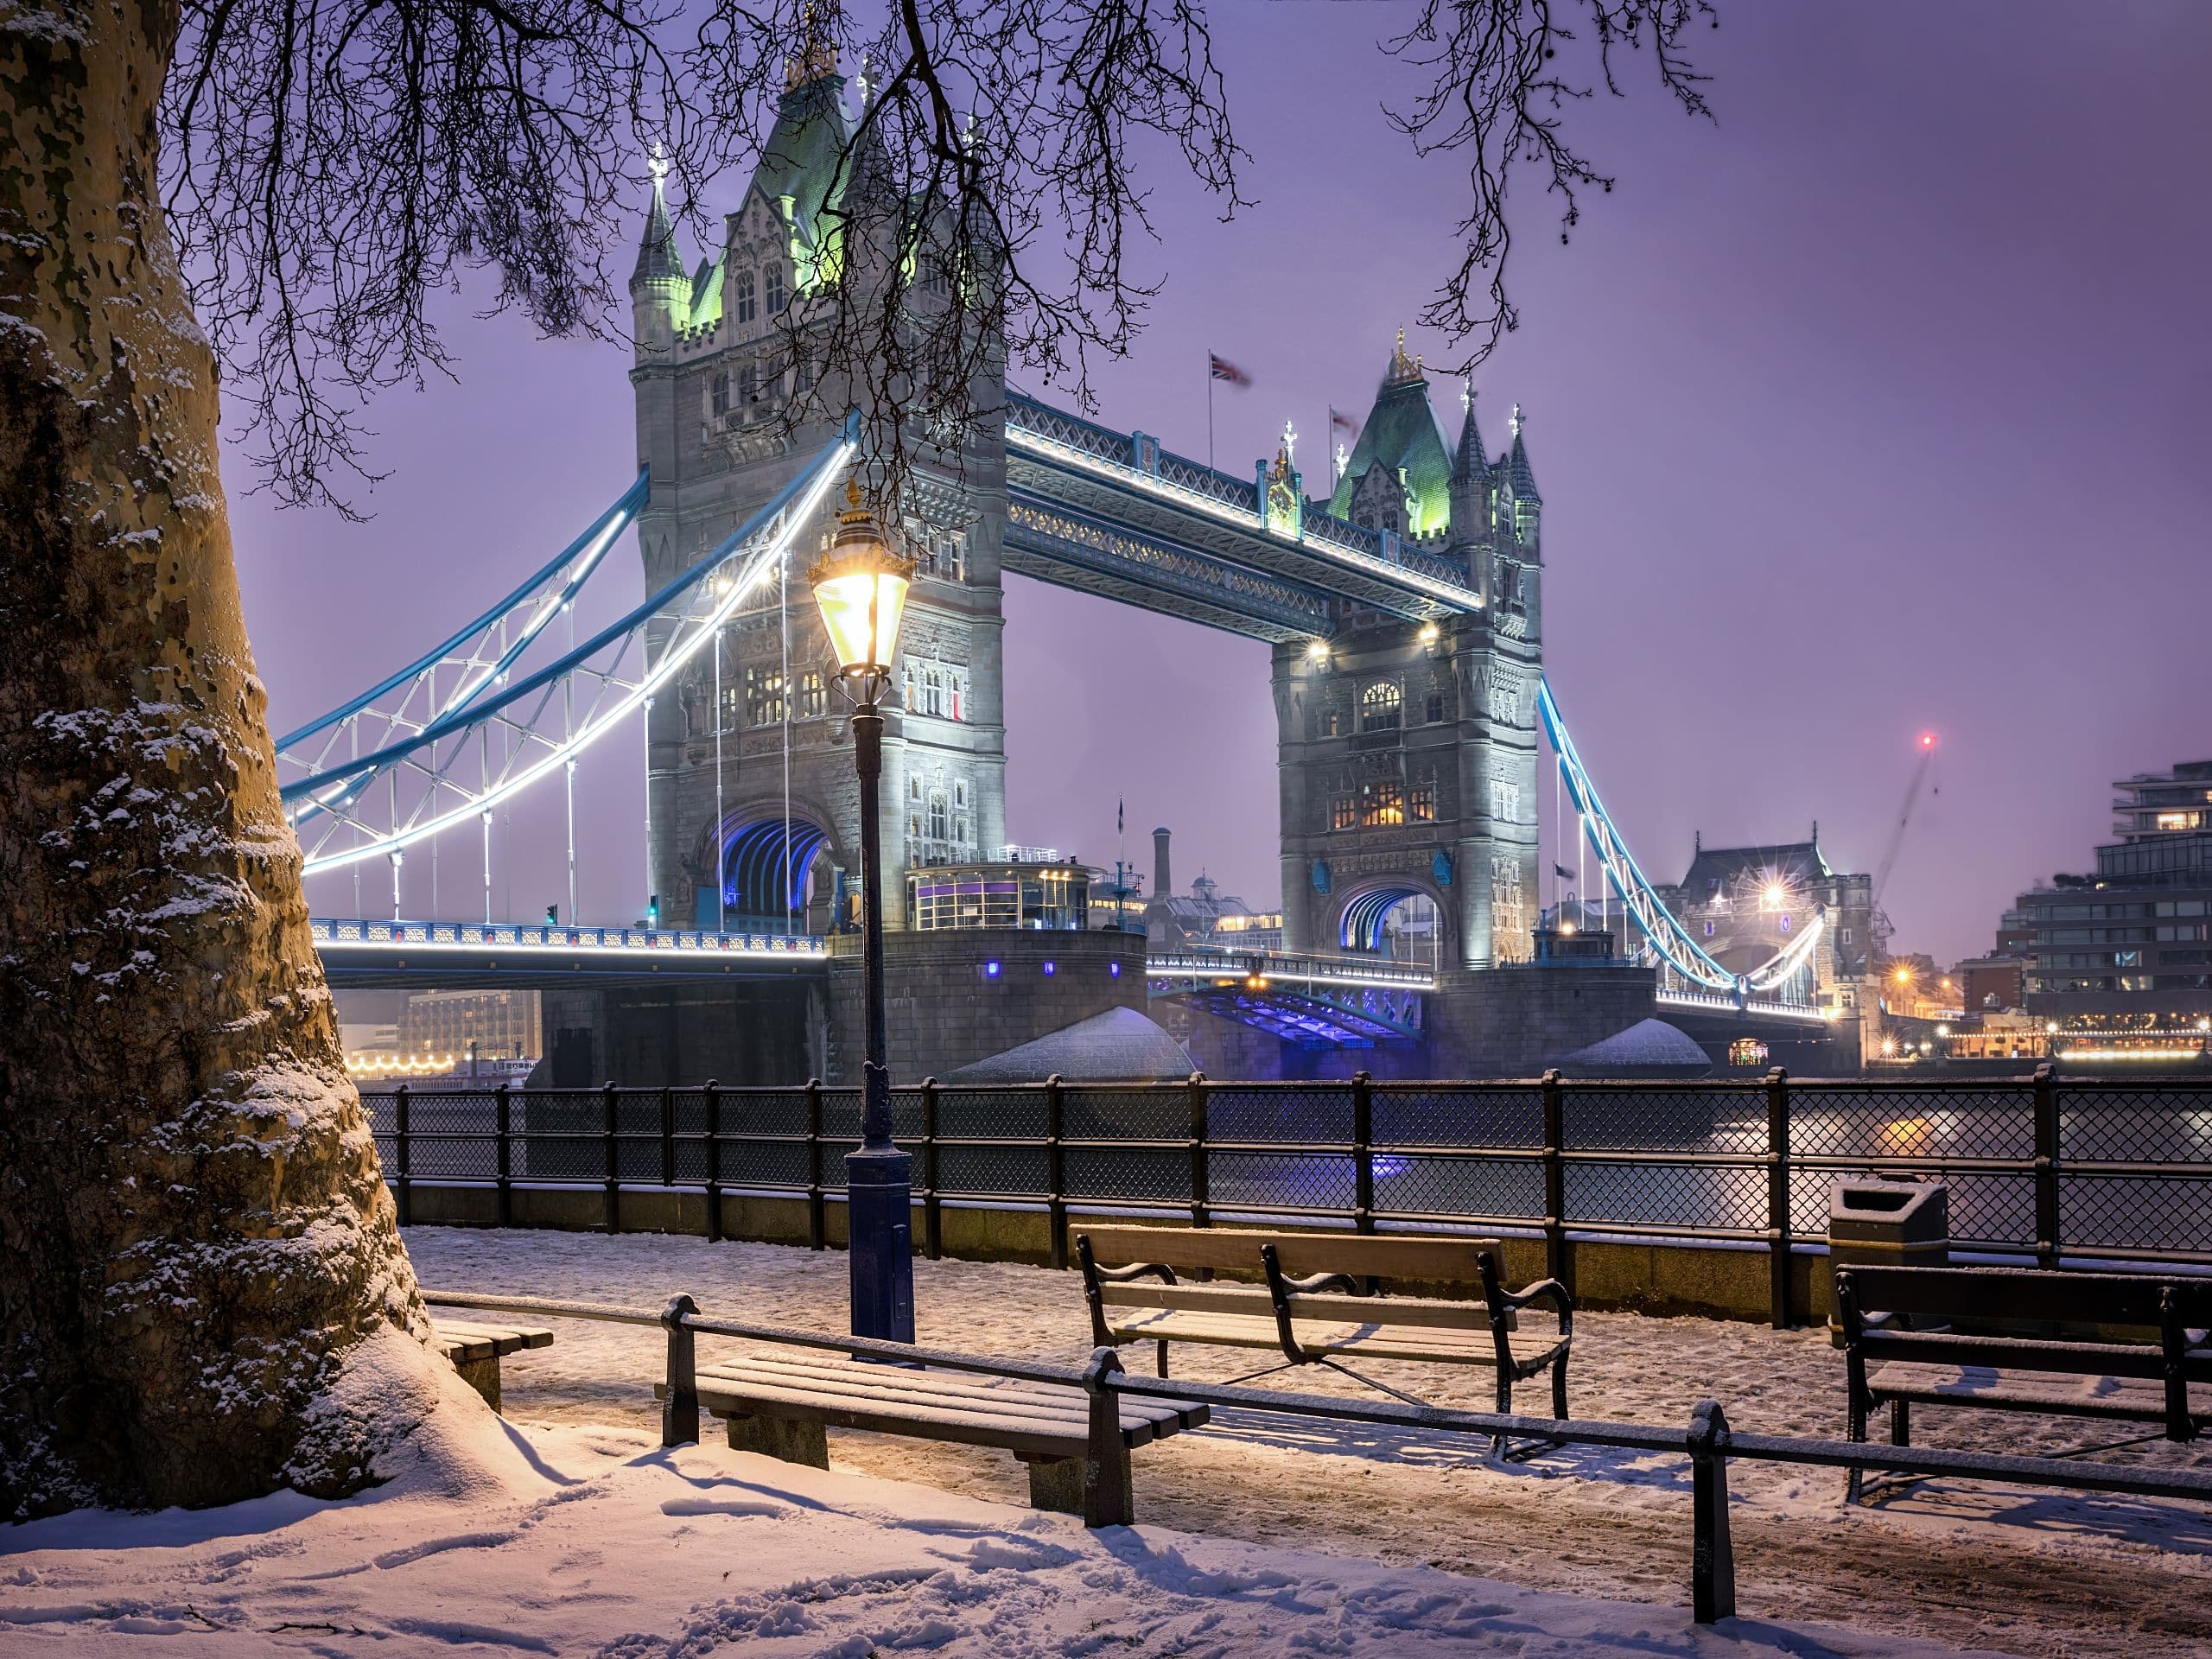 Andaz London Liverpool Street Tower Bridge in Winter